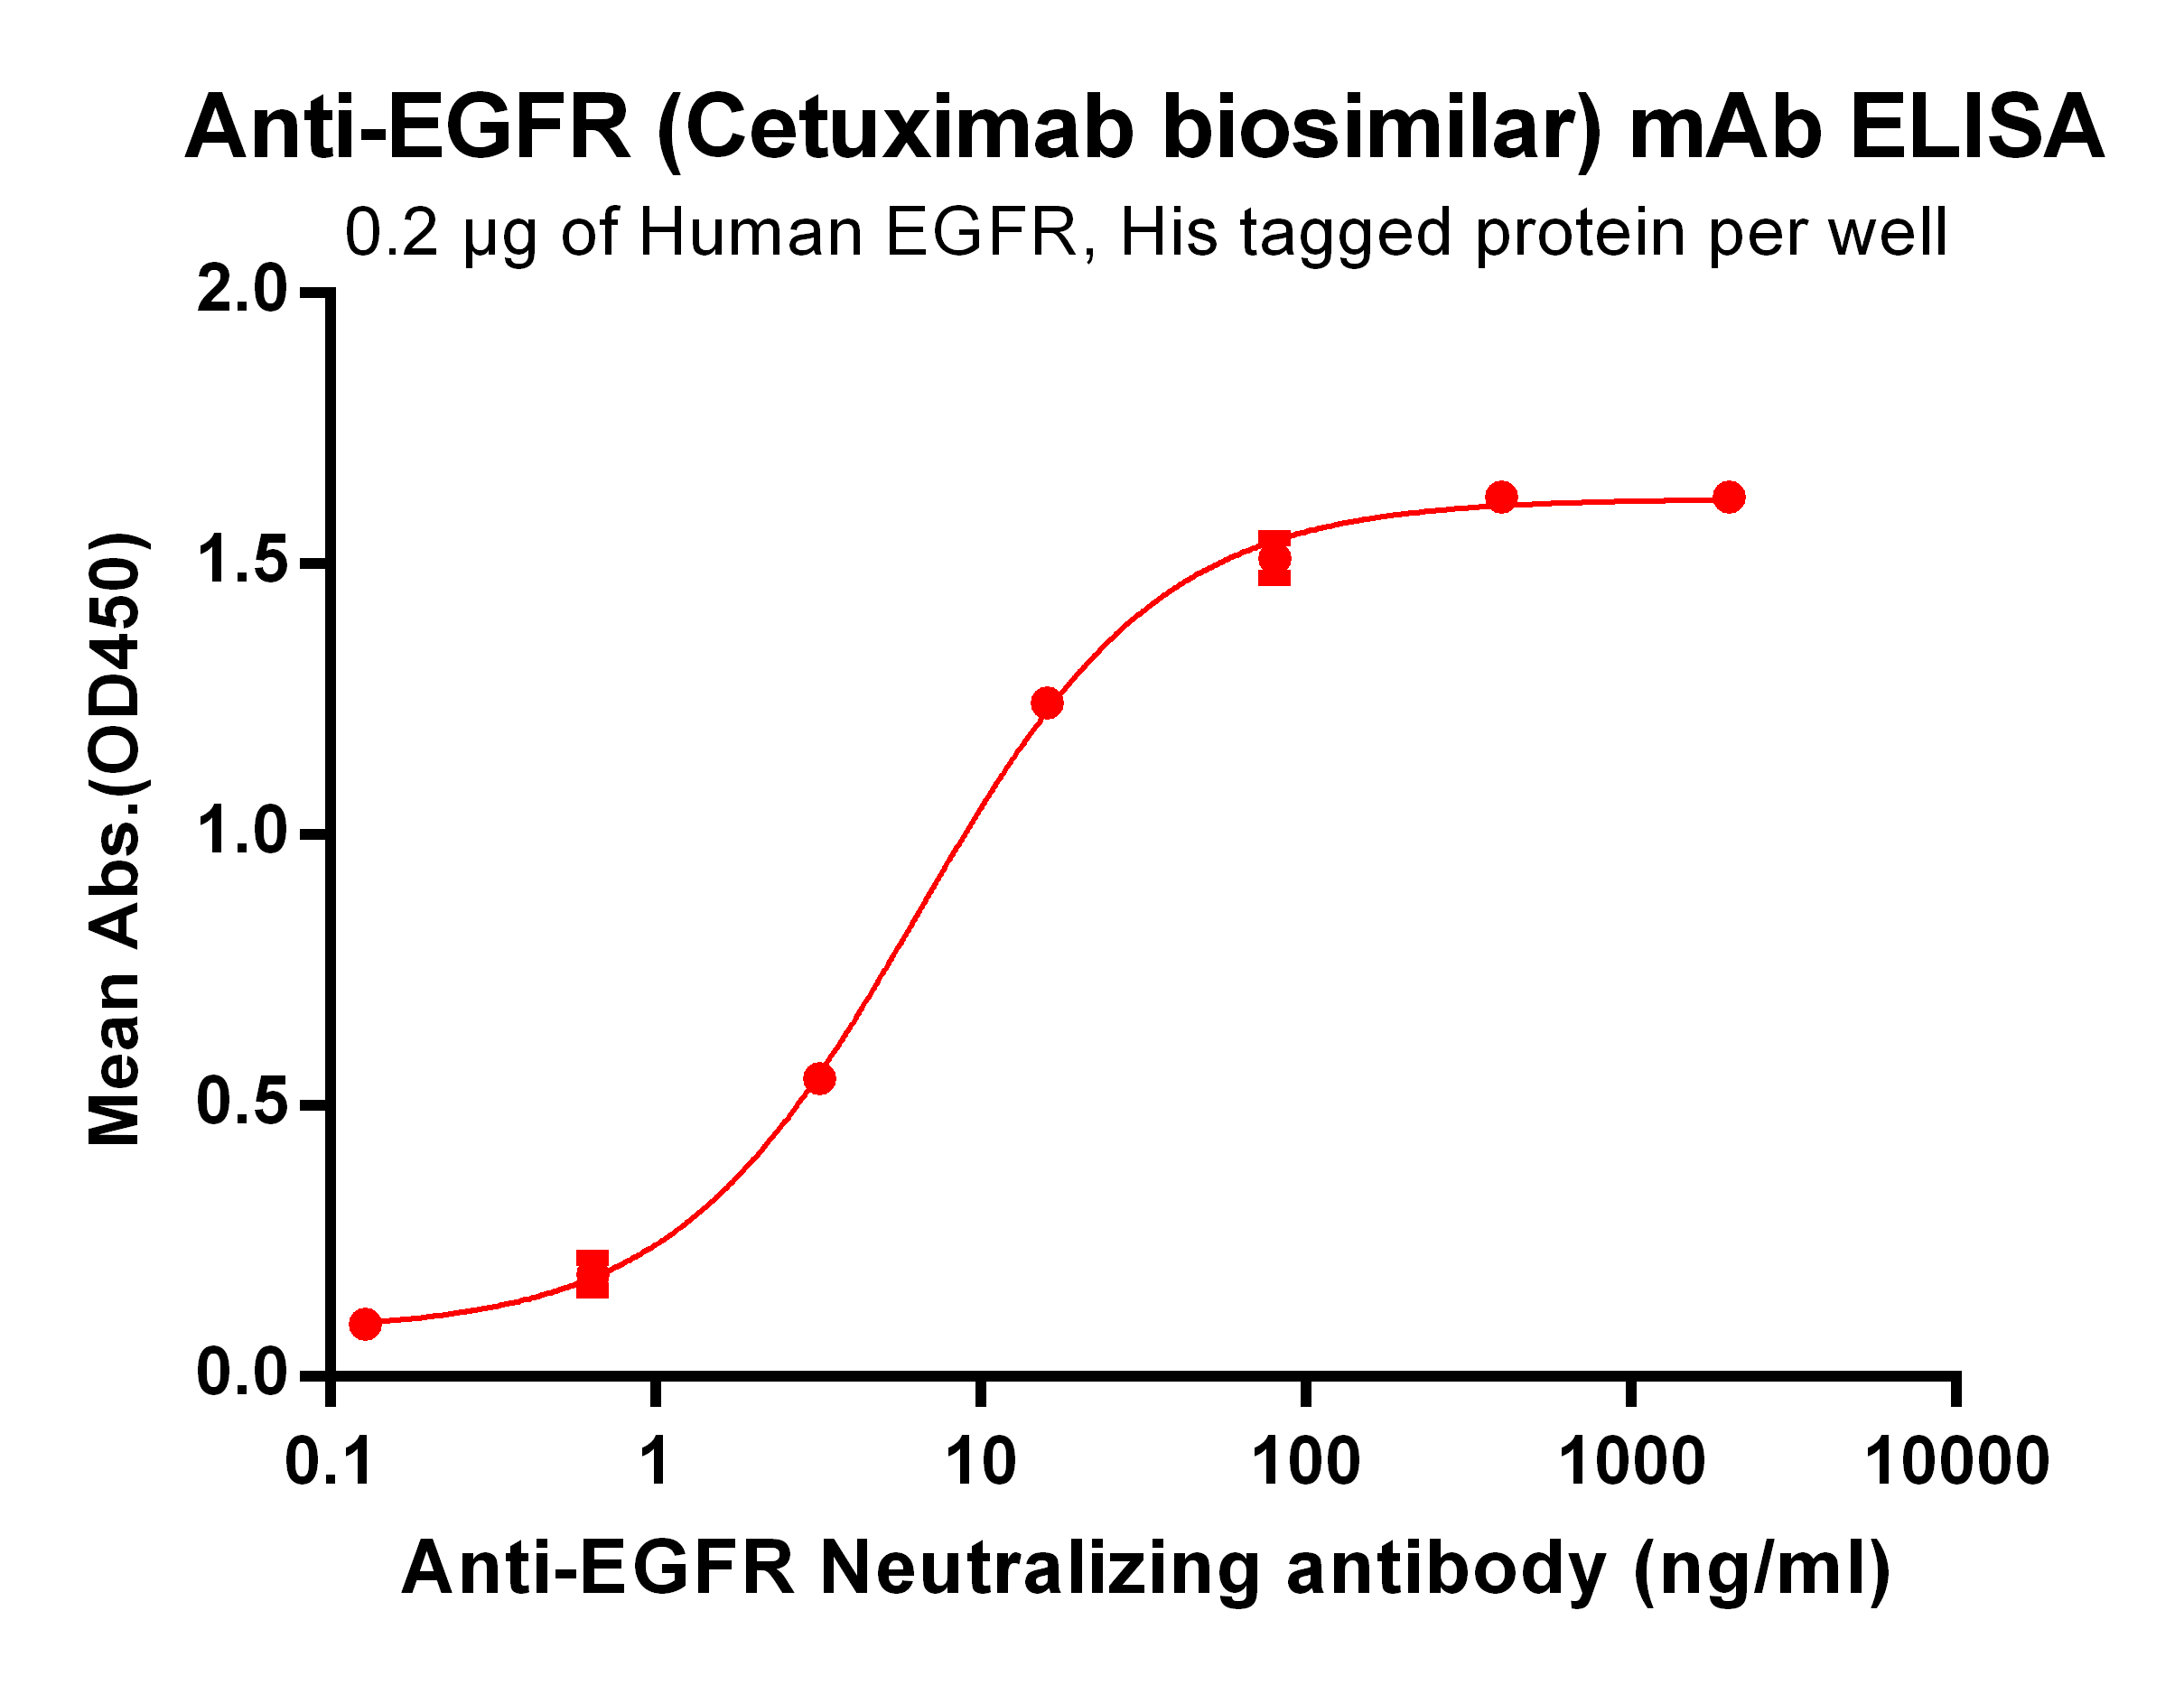 BME100034-Anti-EGFR-Cetuximab-biosimilar-mAb-Elisa-fig1.png